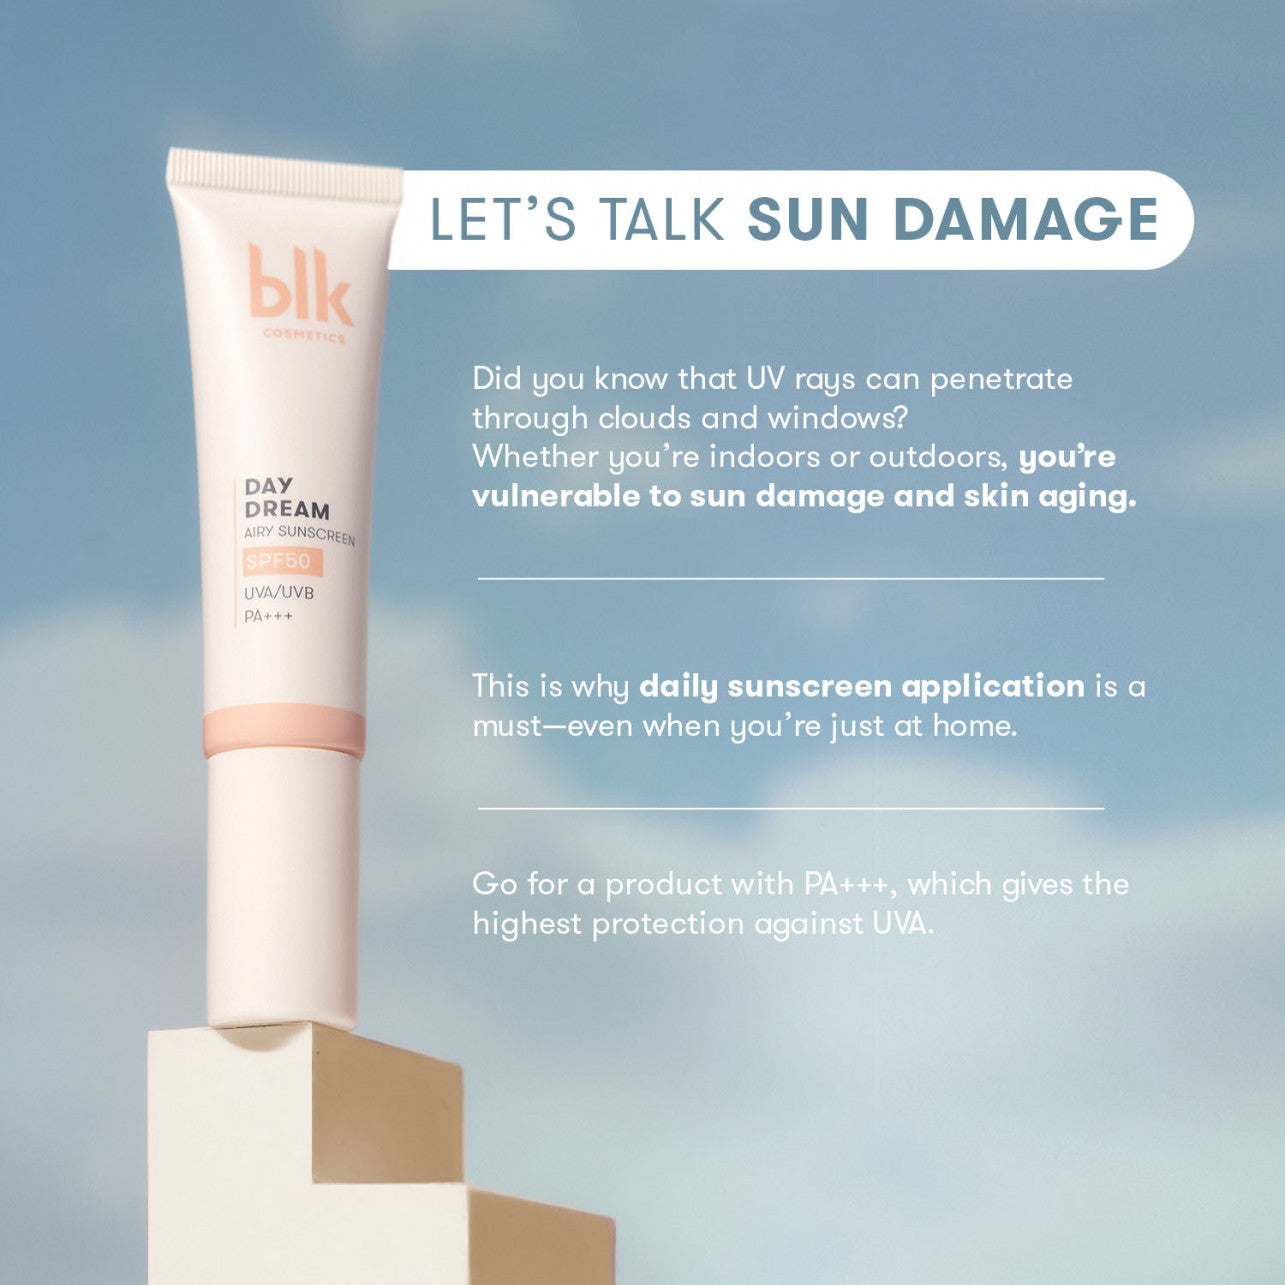 blk Cosmetics Daydream Airy Sunscreen SPF50 (Sheer)